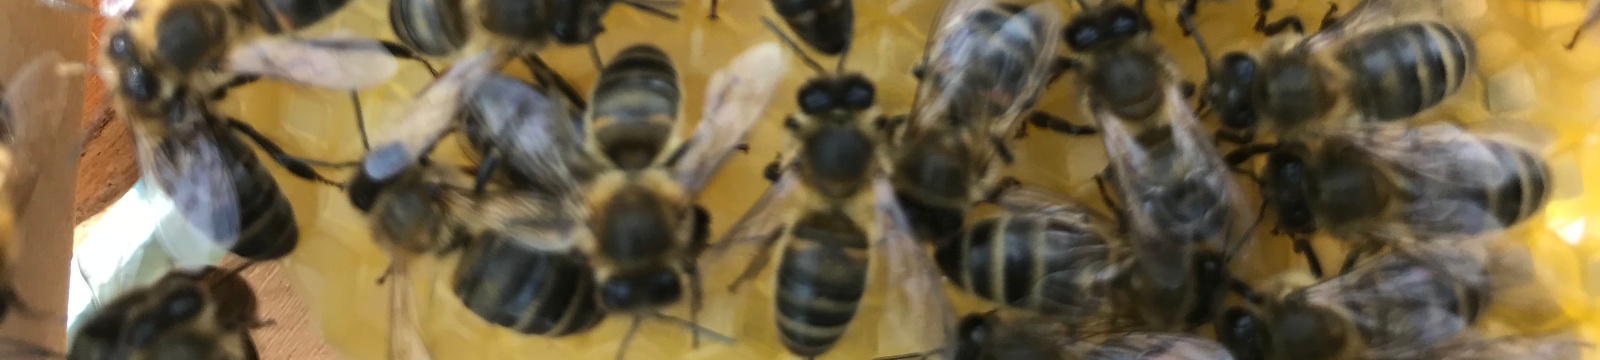 Miels et produits de la ruche